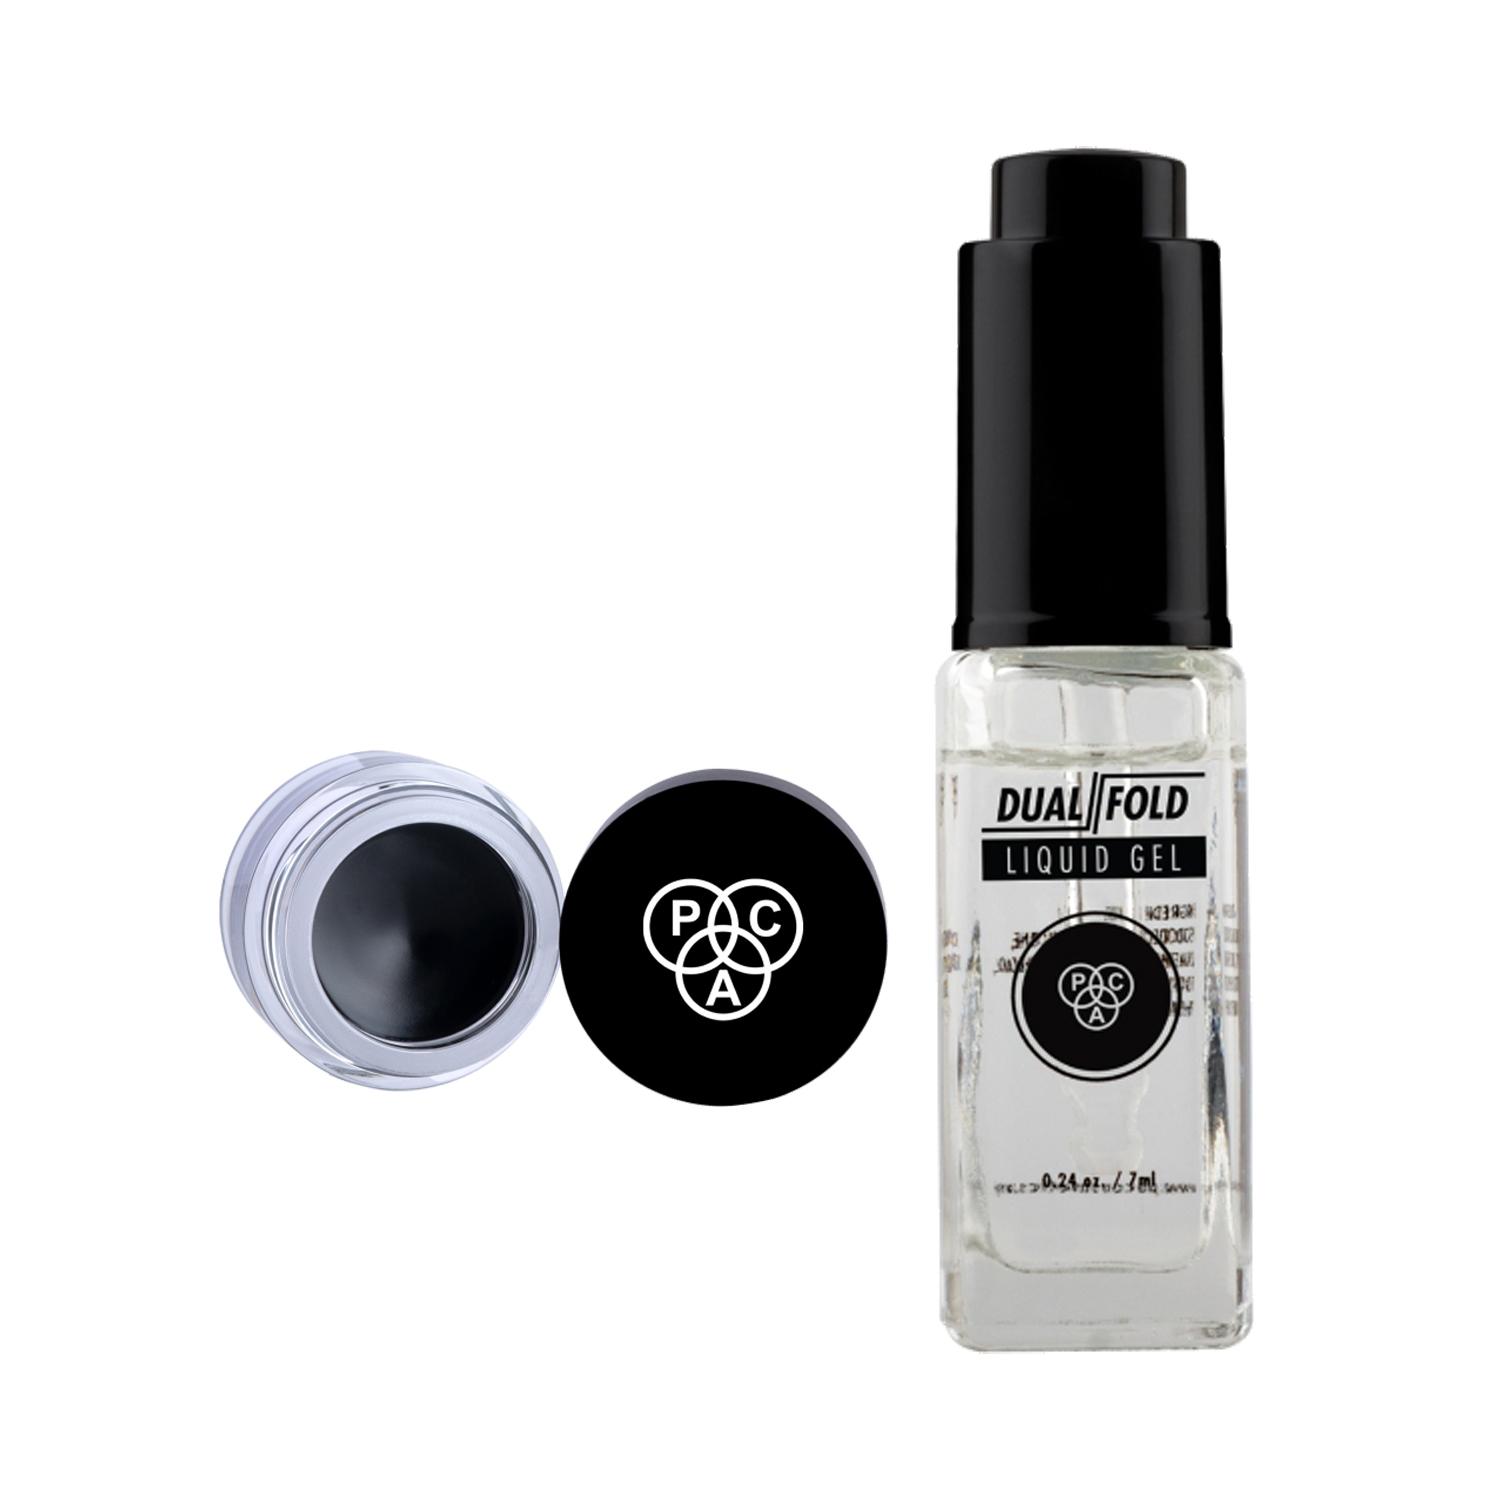 PAC | PAC Spotlight Gel Eye Liner (Black) & Dual-Fold Liquid Gel Combo